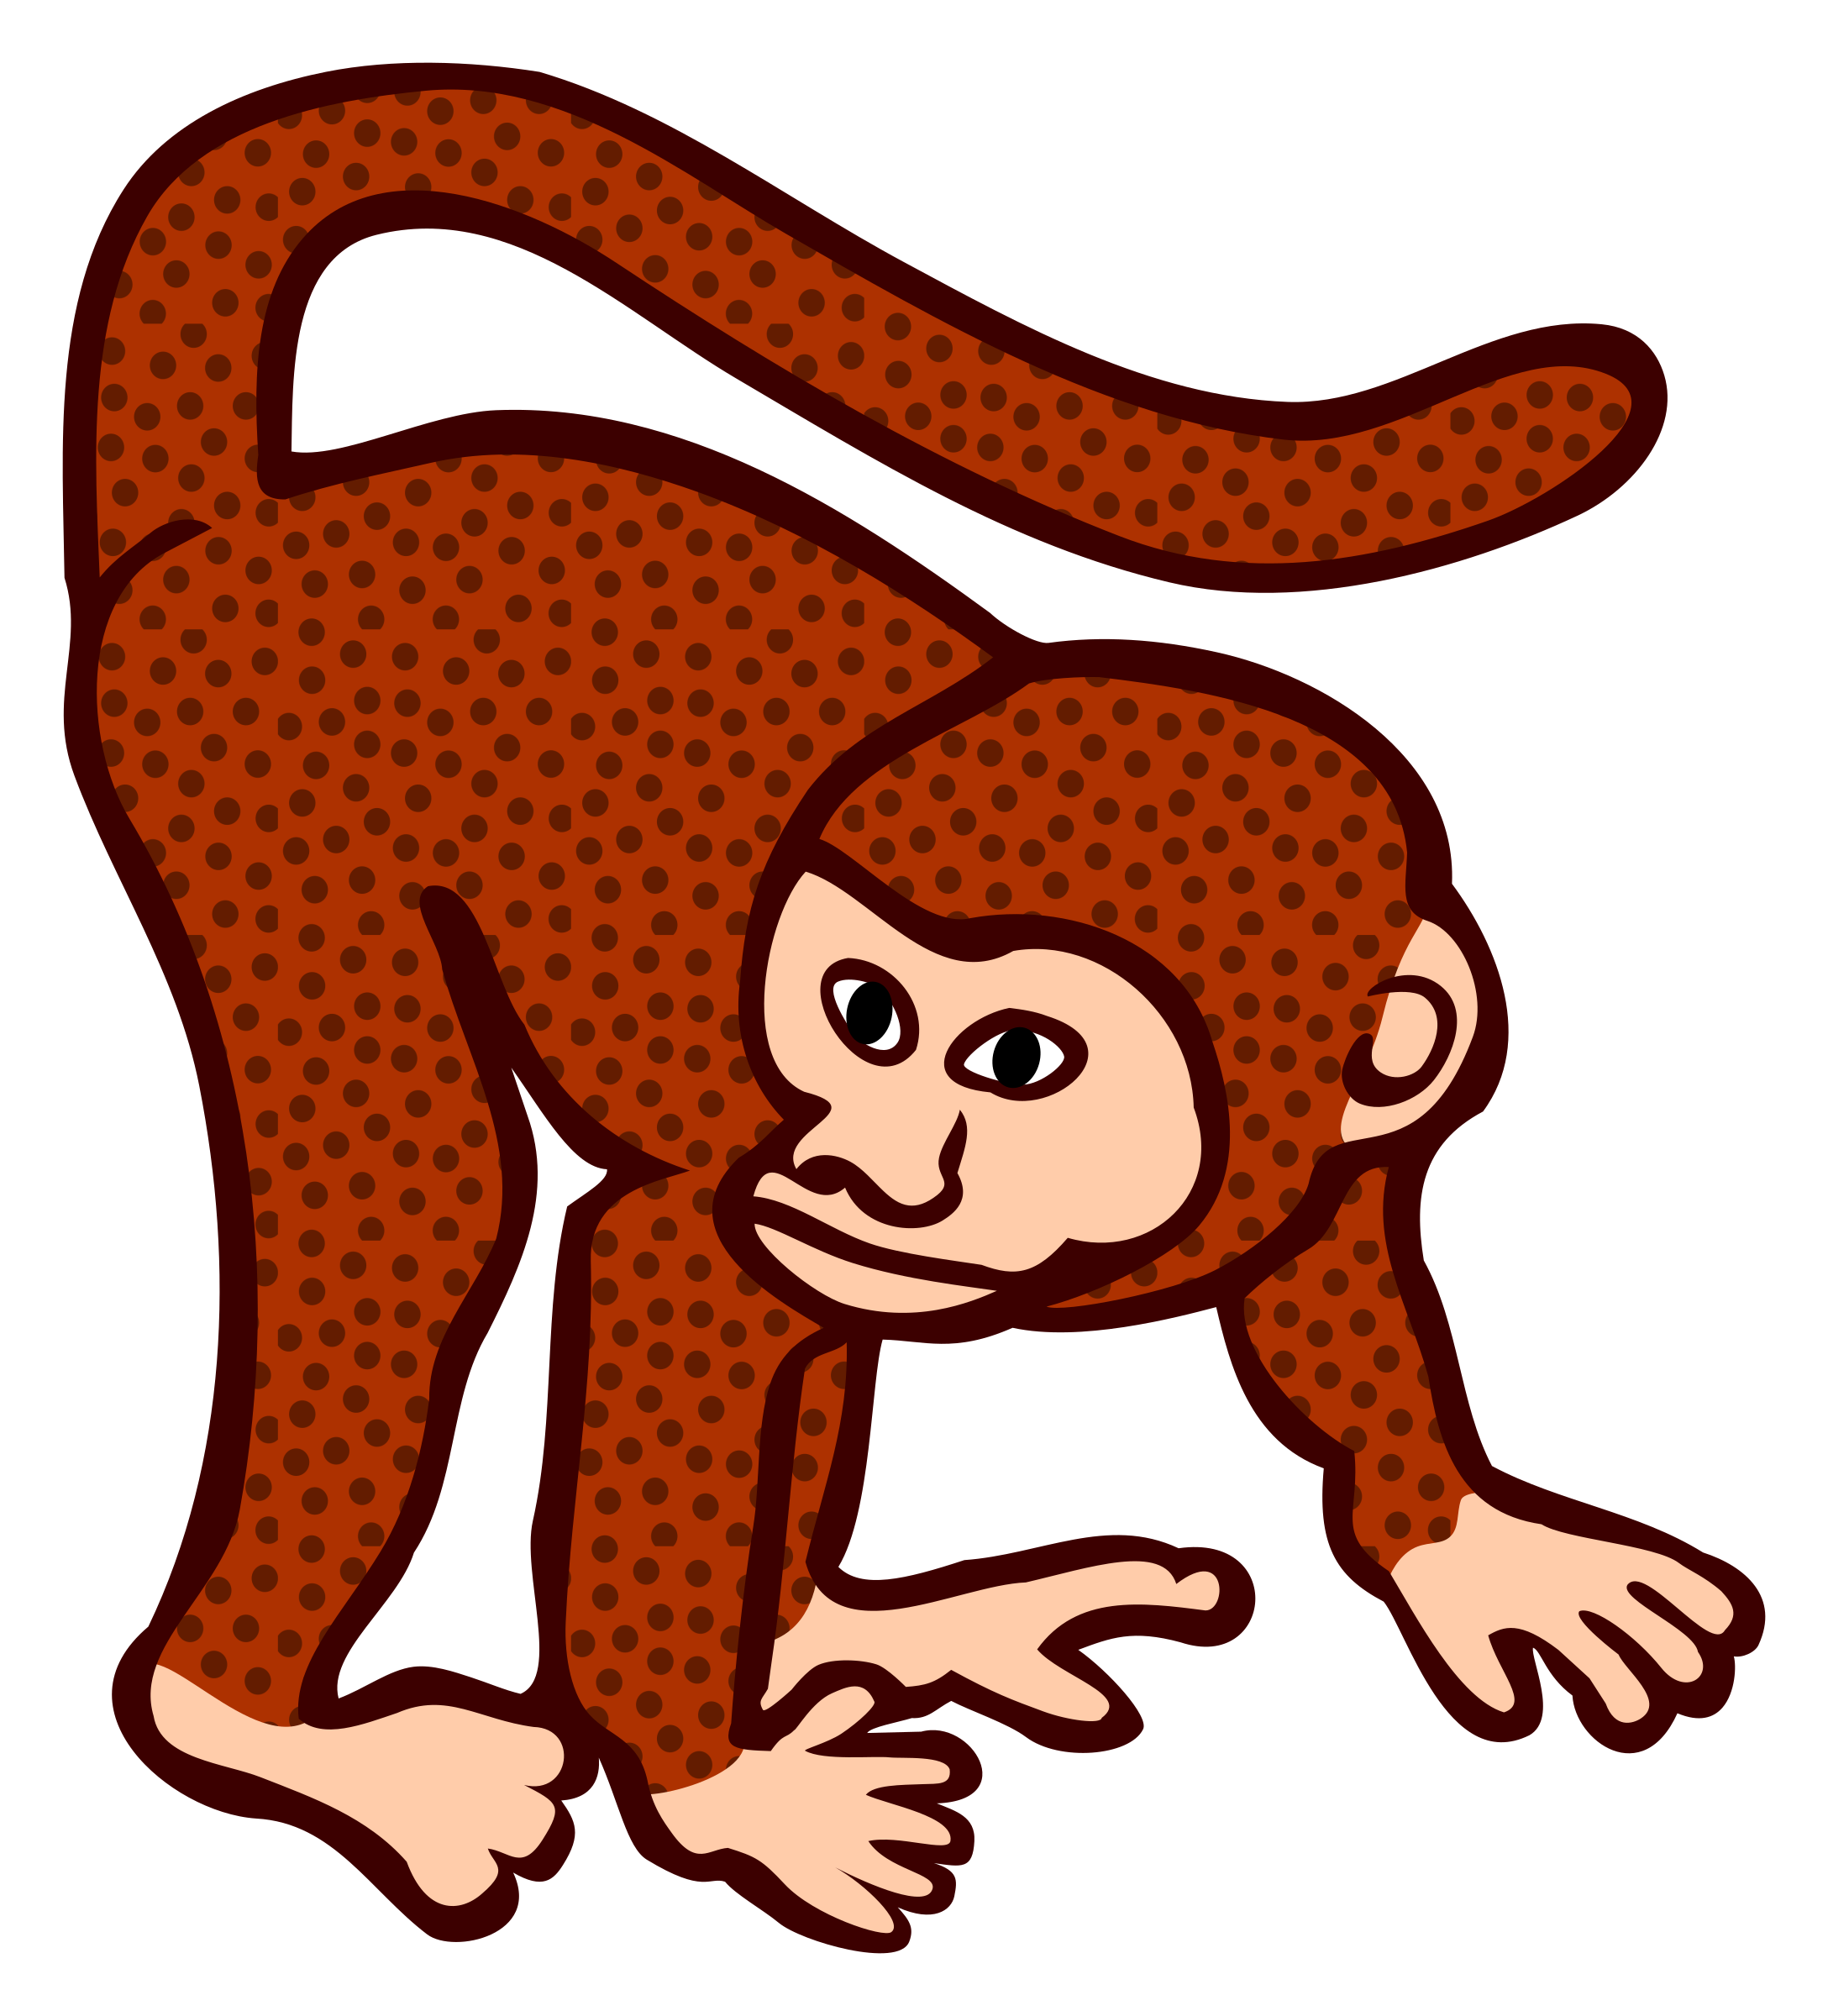 clipart monkey school